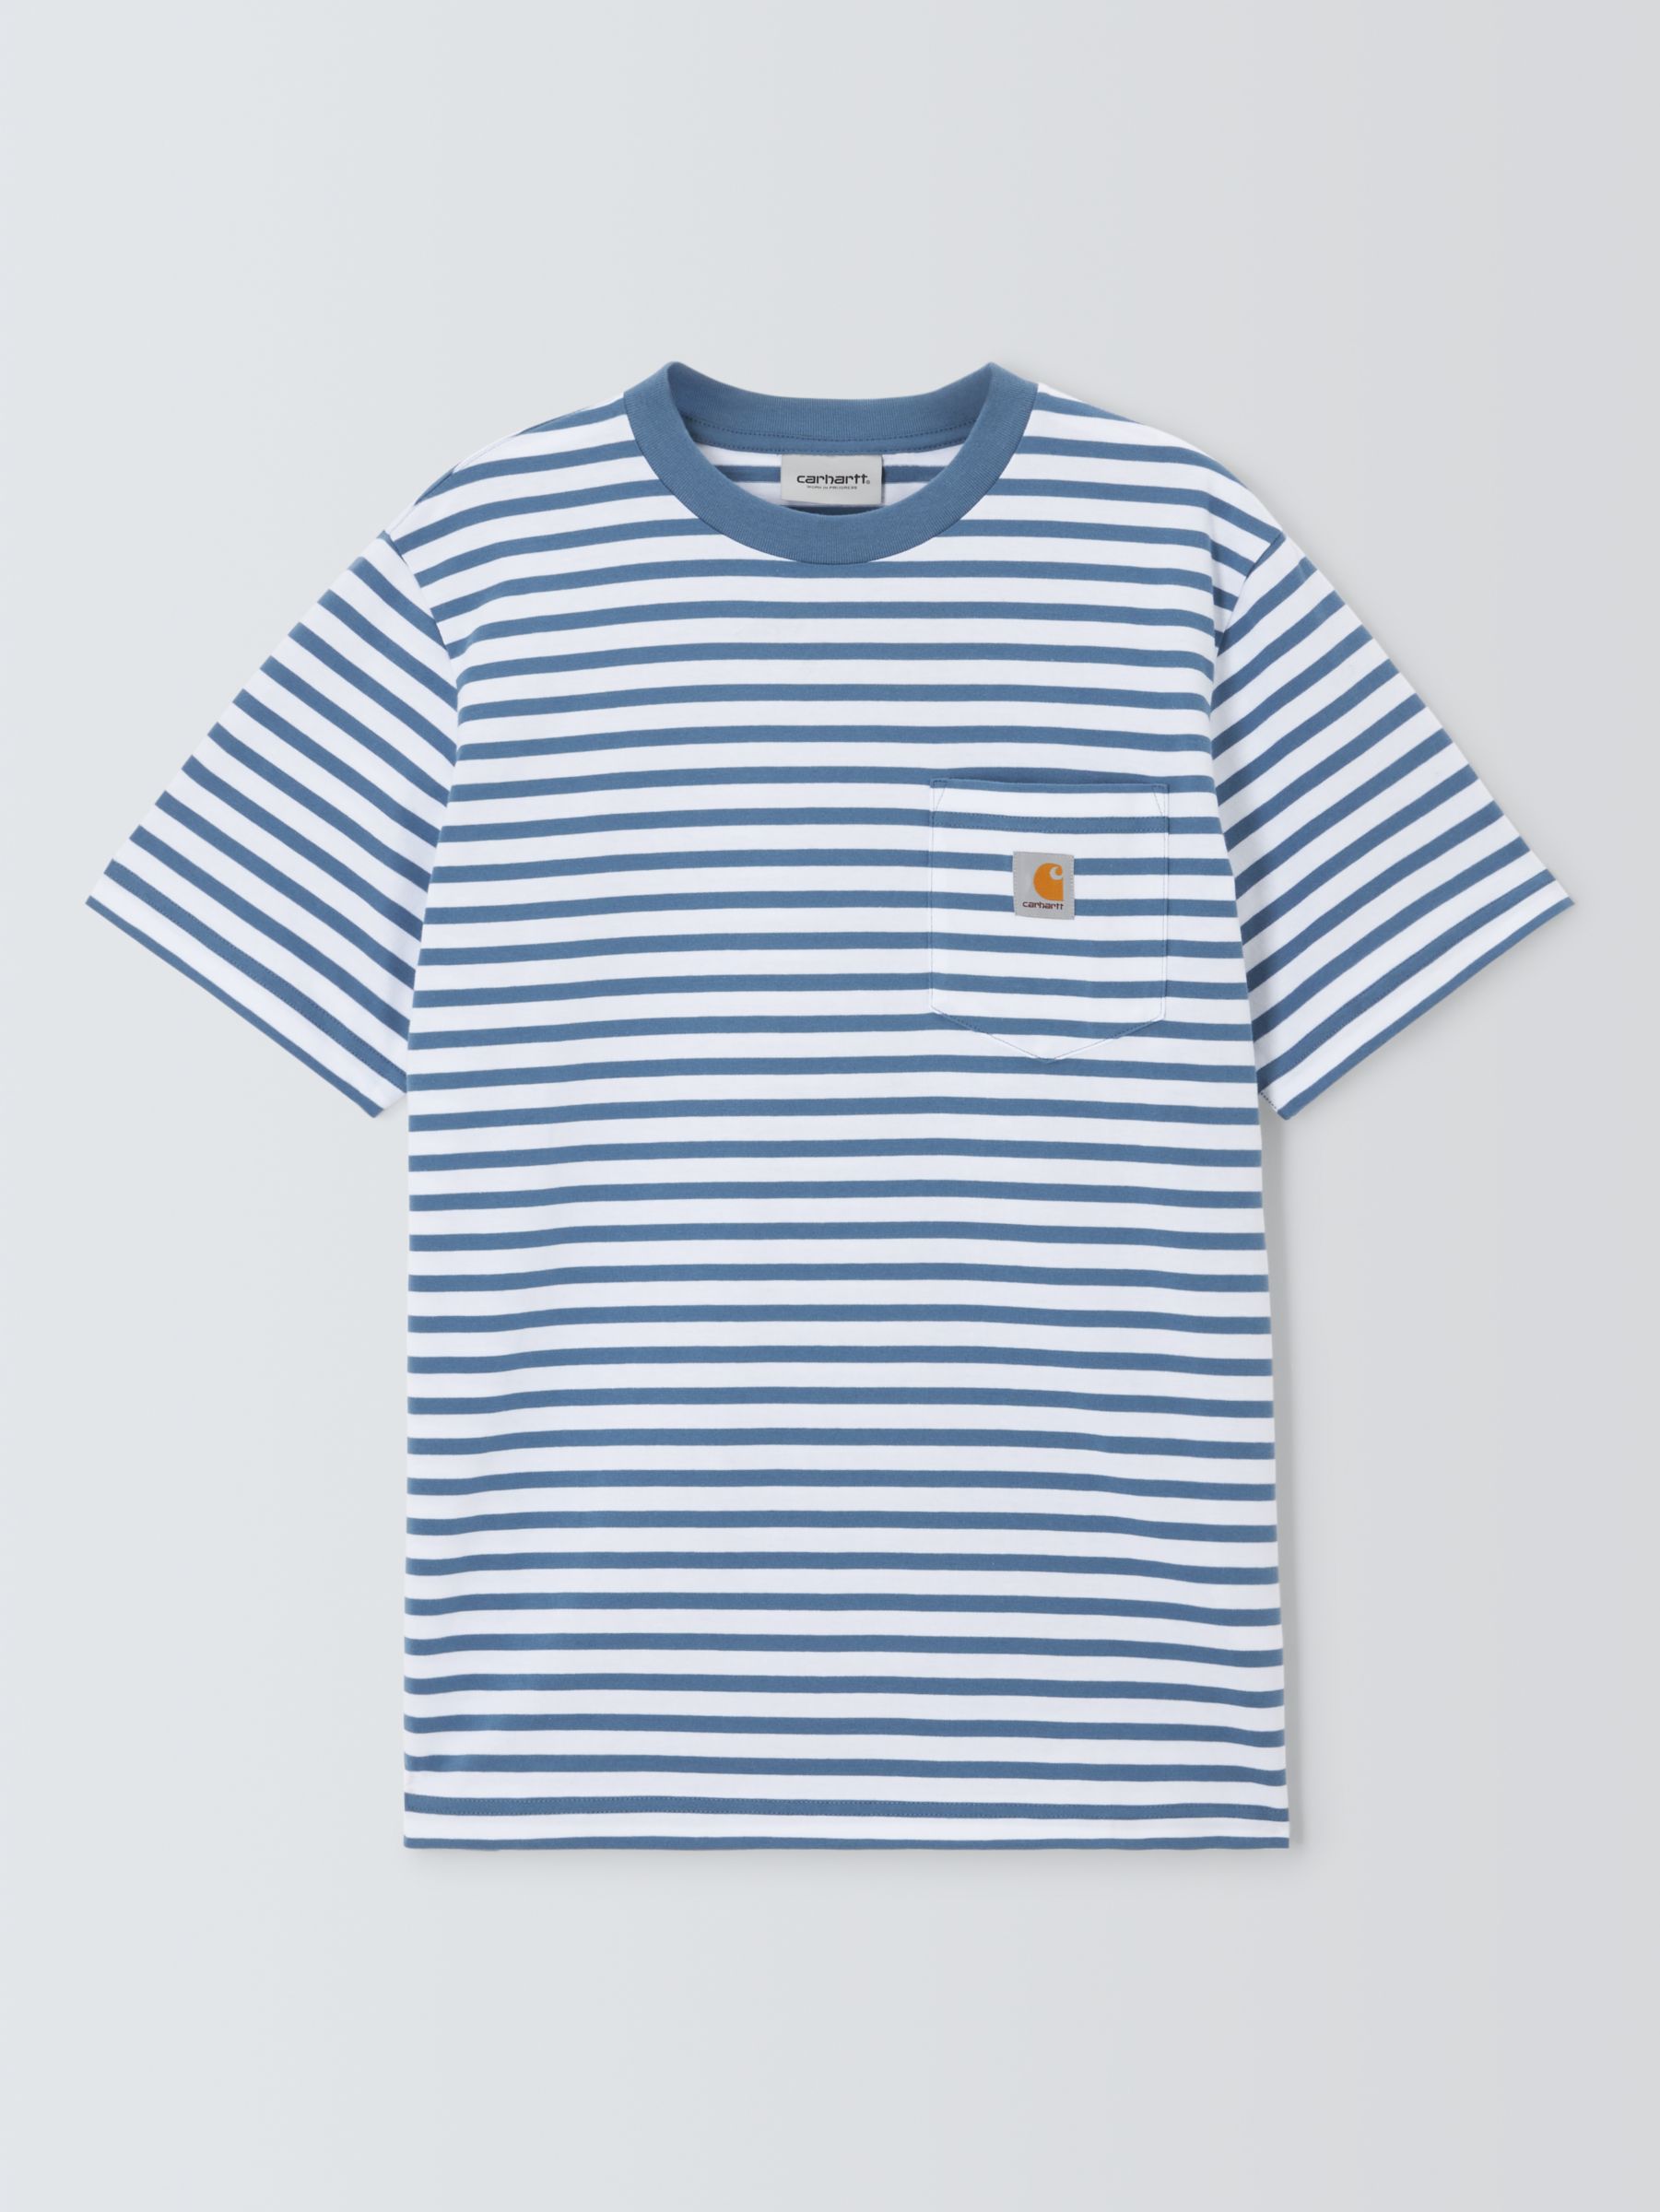 Carhartt WIP Seidler Striped T-Shirt, Blue/White, XL